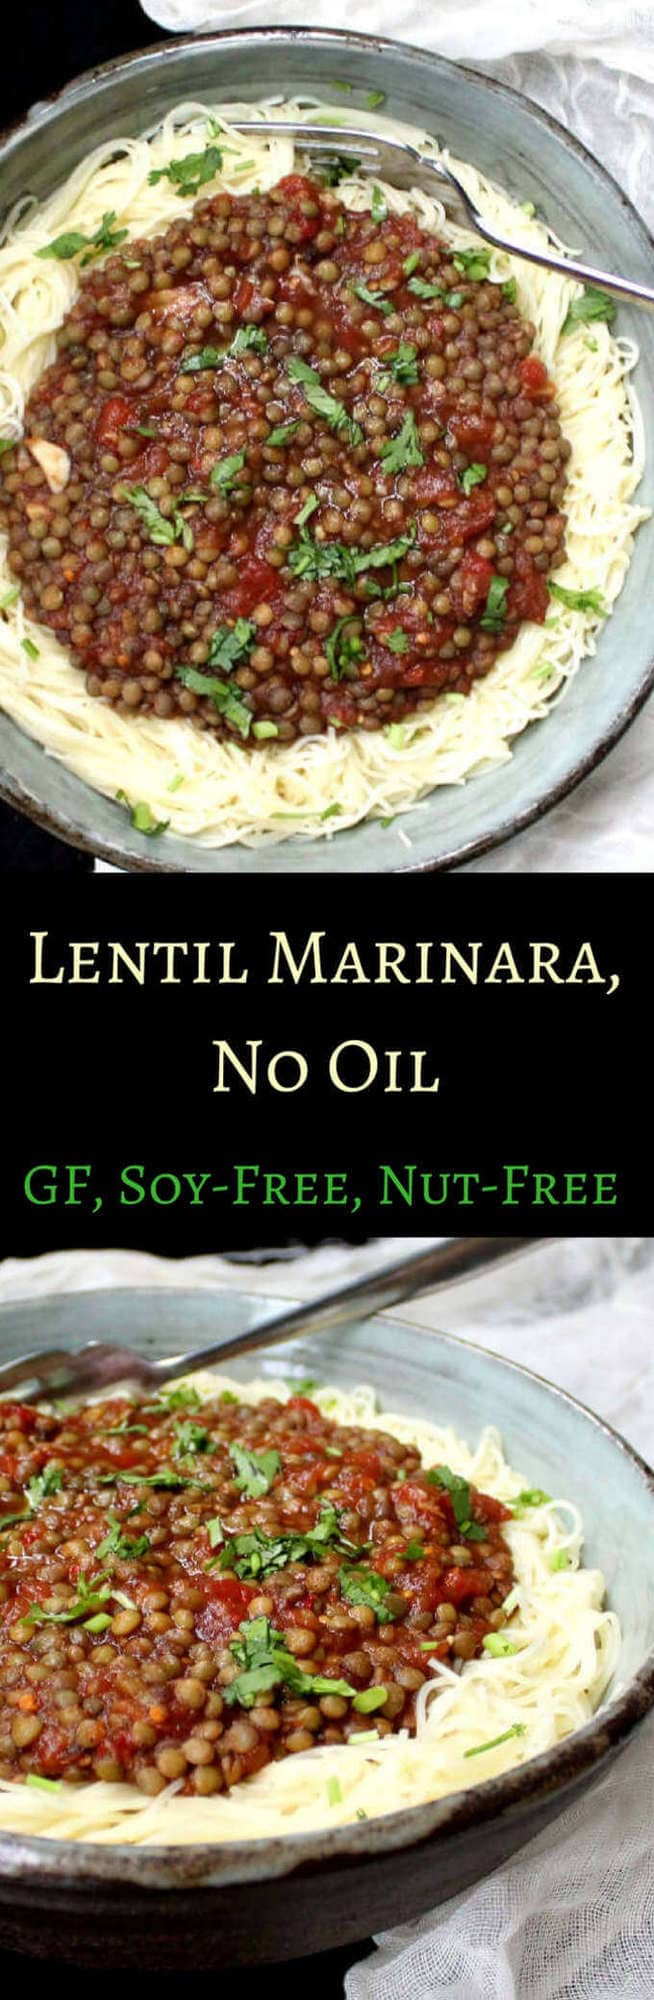 Vegan Lentil Marinara with French Lentils. GF, oil-free, nut-free and soy-free. HolyCowVegan.net